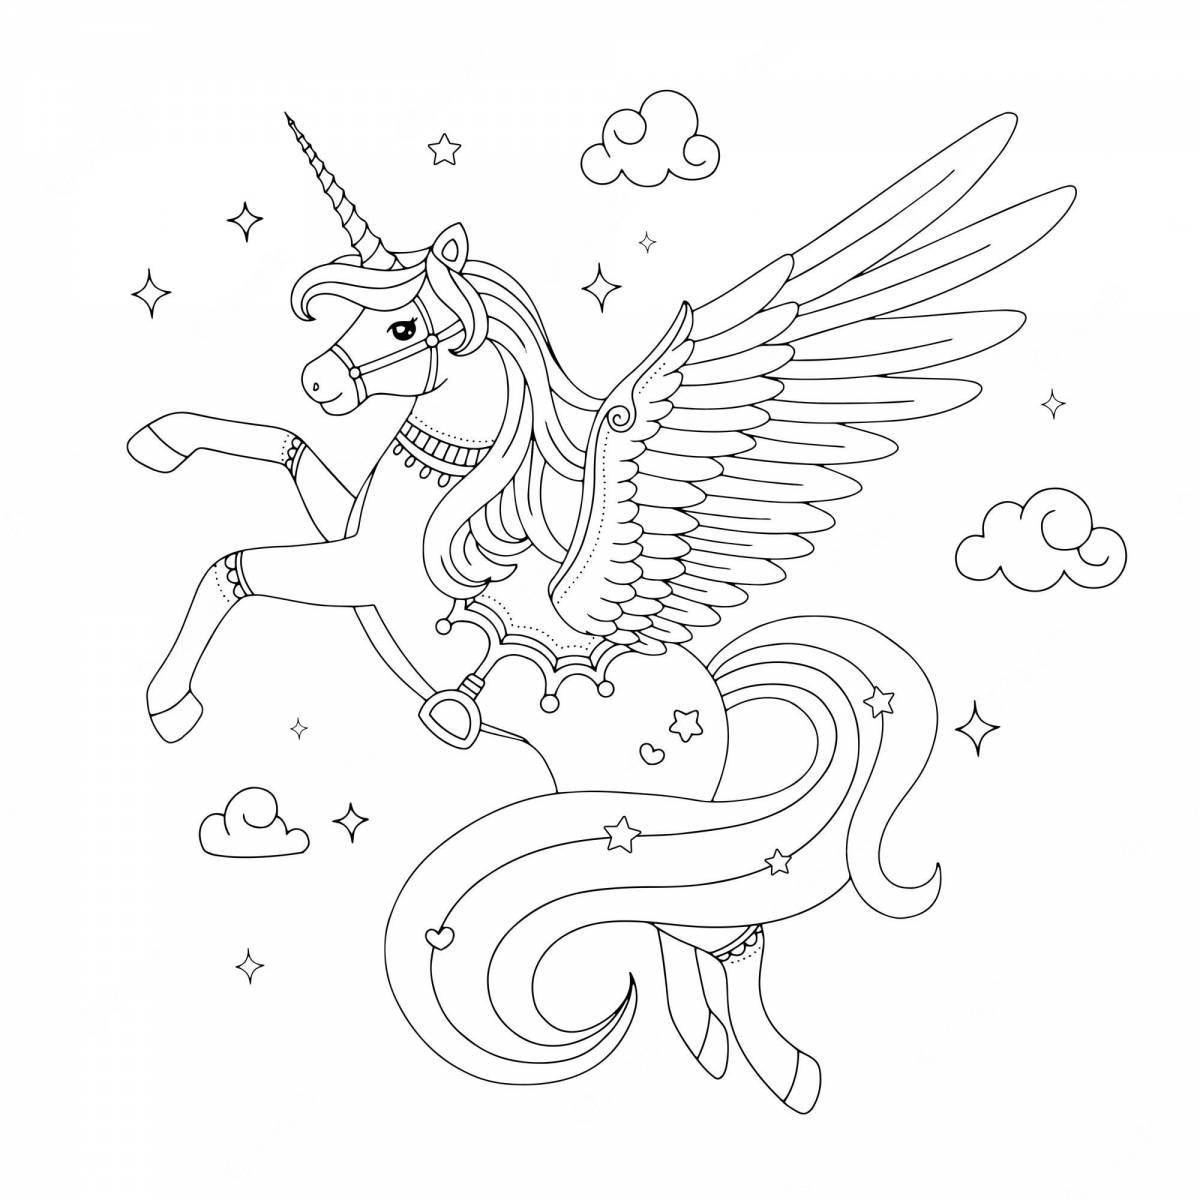 Coloring book elegant flying unicorns